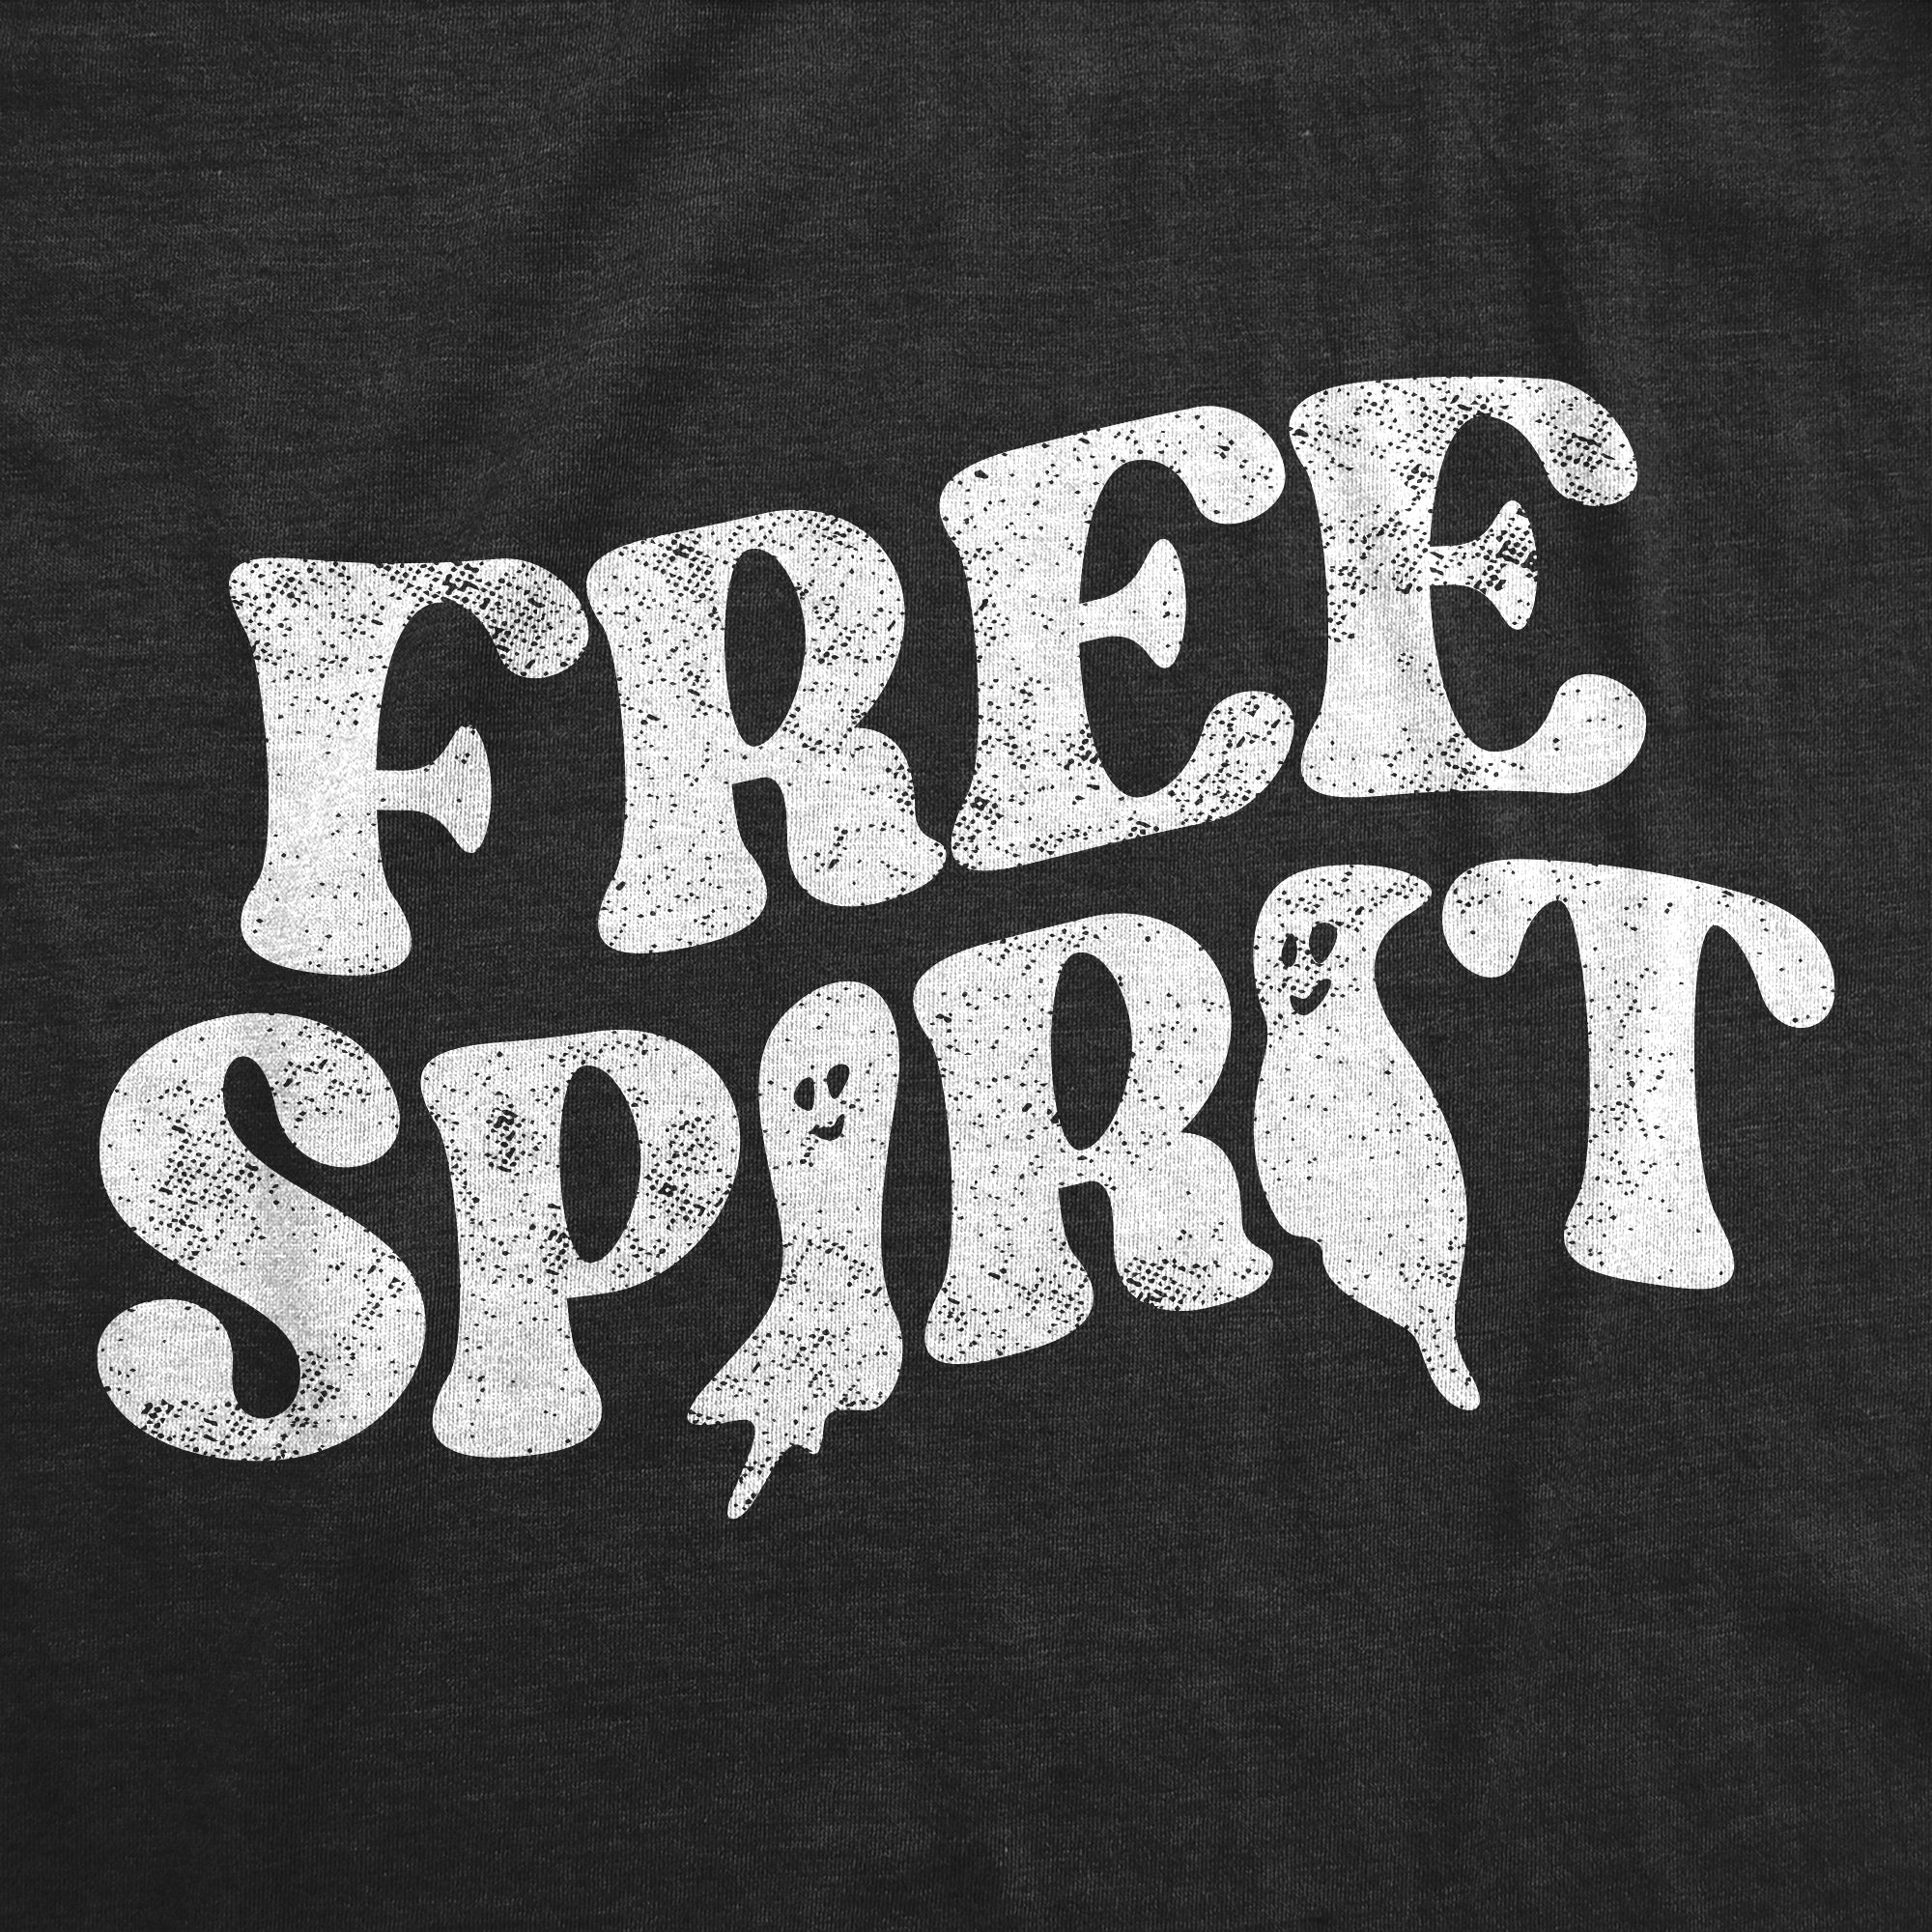 Funny Heather Black Free Spirit Mens T Shirt Nerdy Halloween Sarcastic Tee